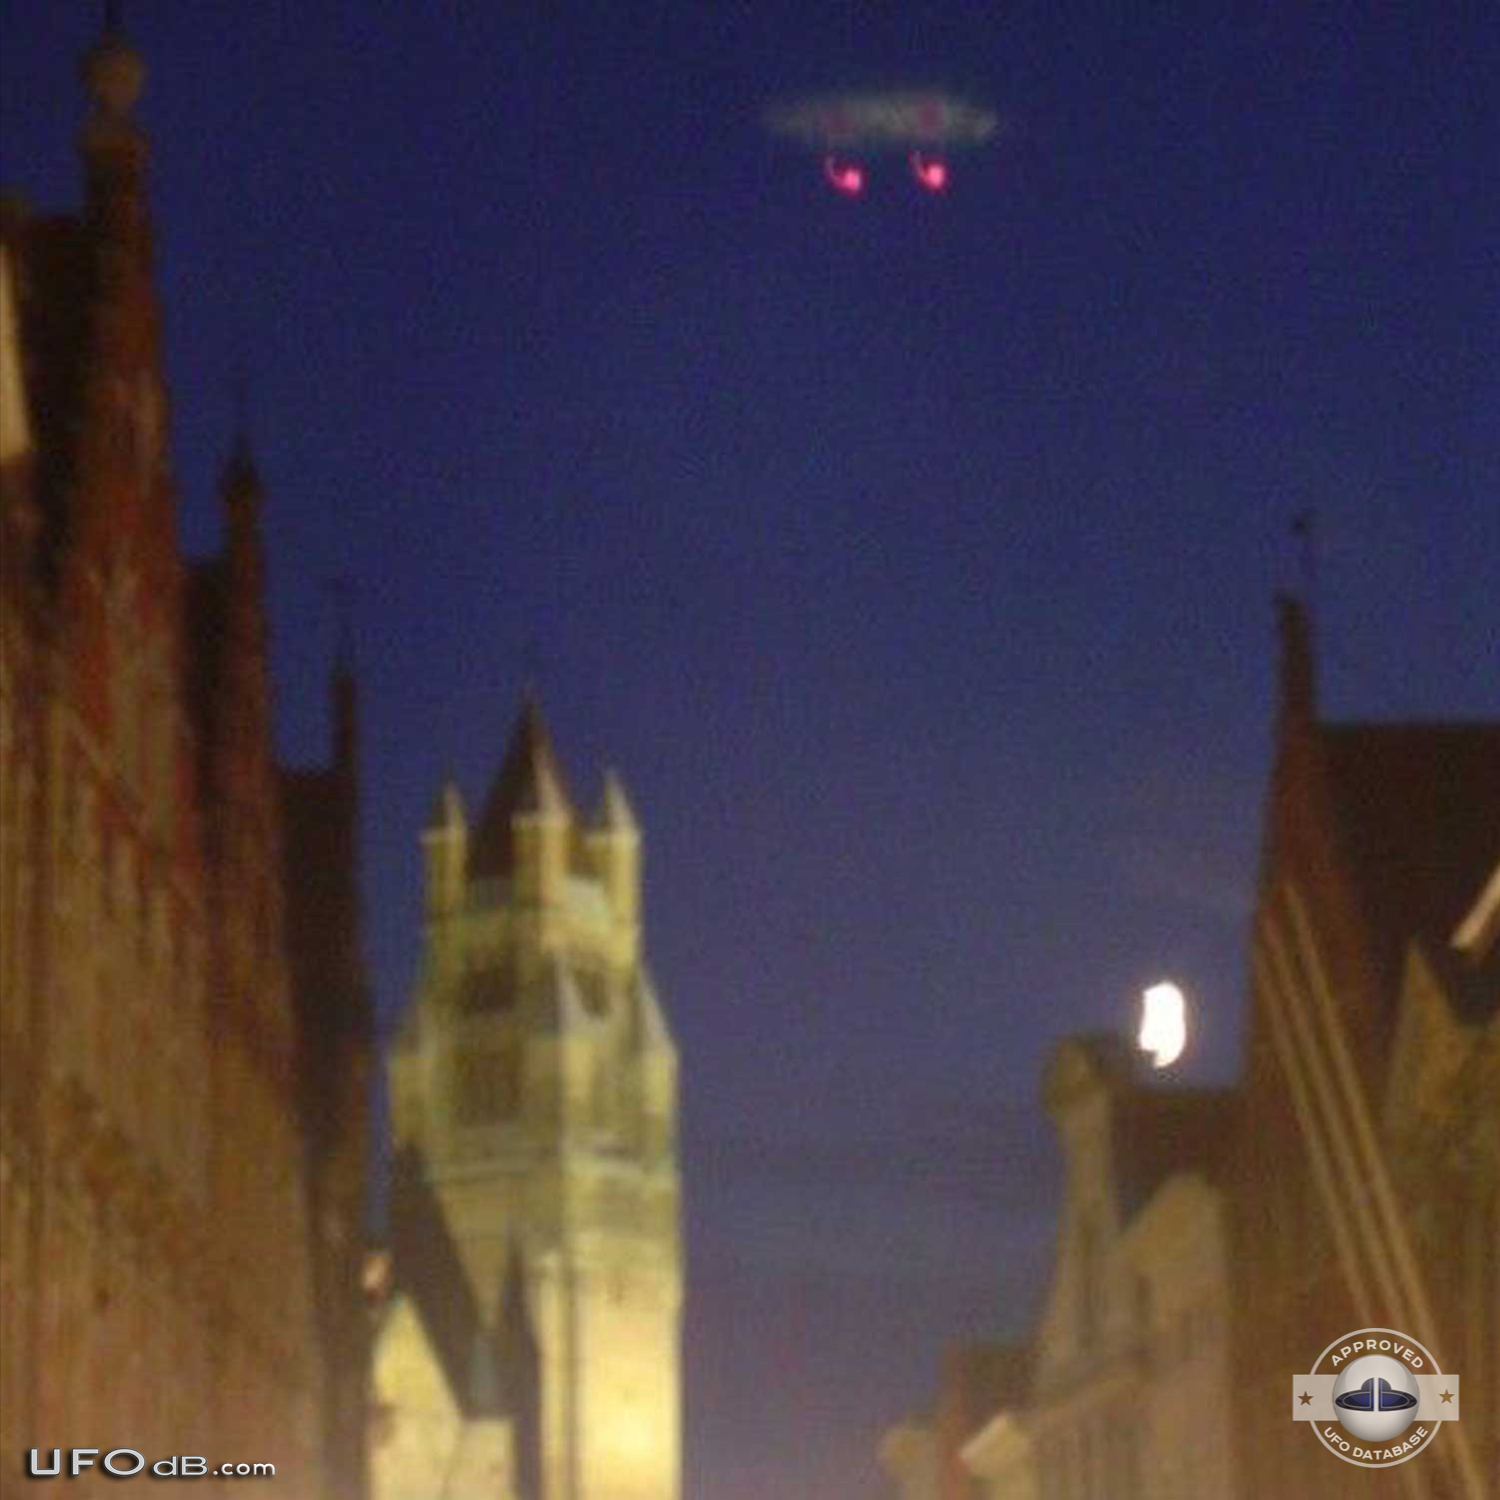 Strange Saucer UFO over Bruges Belgium caugh on picture in 2005 UFO Picture #434-2